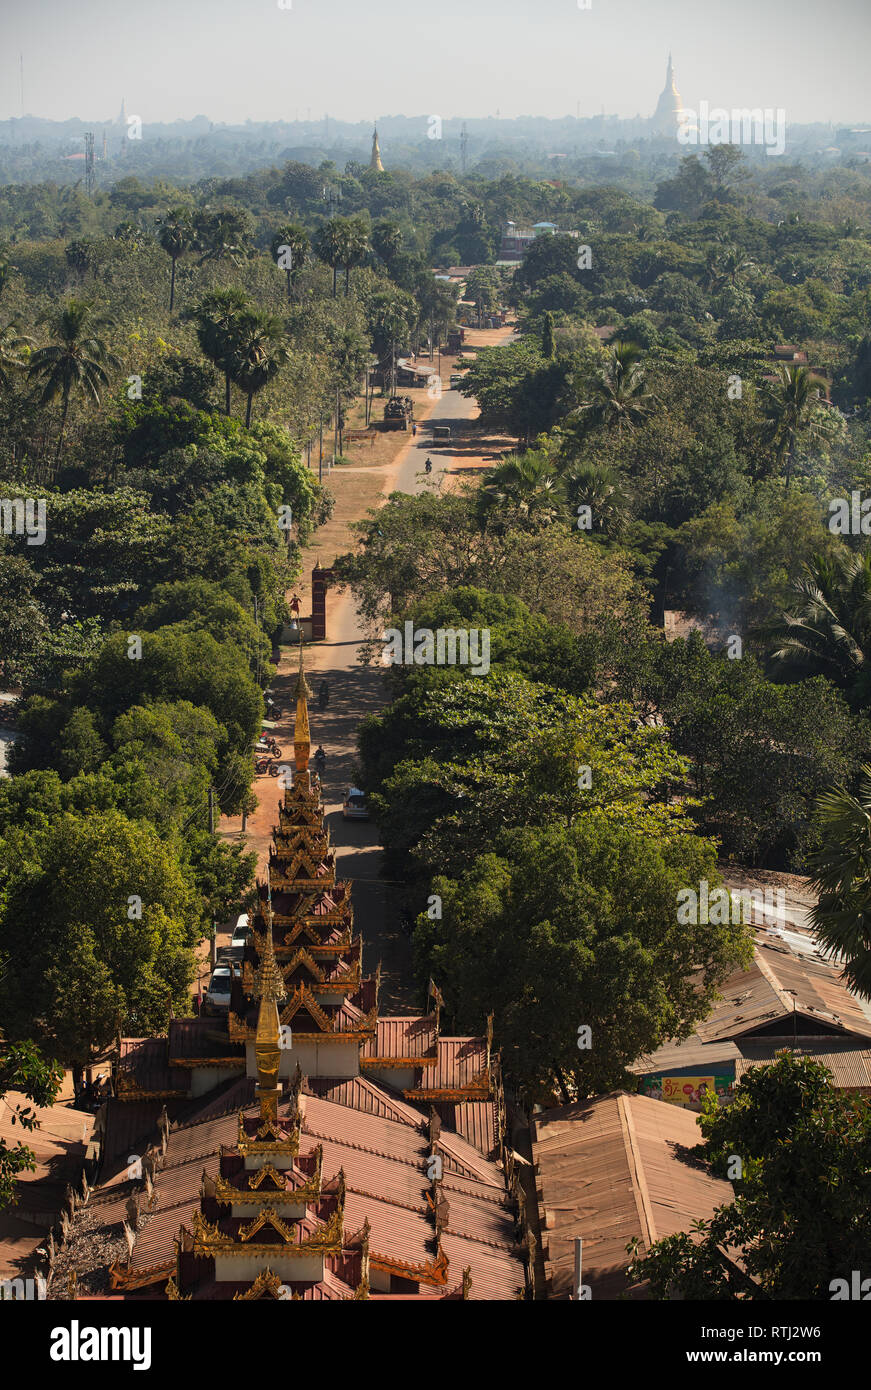 View of Bago from the top of the Mahazedi Pagoda, Myanmar (Burma). Stock Photo